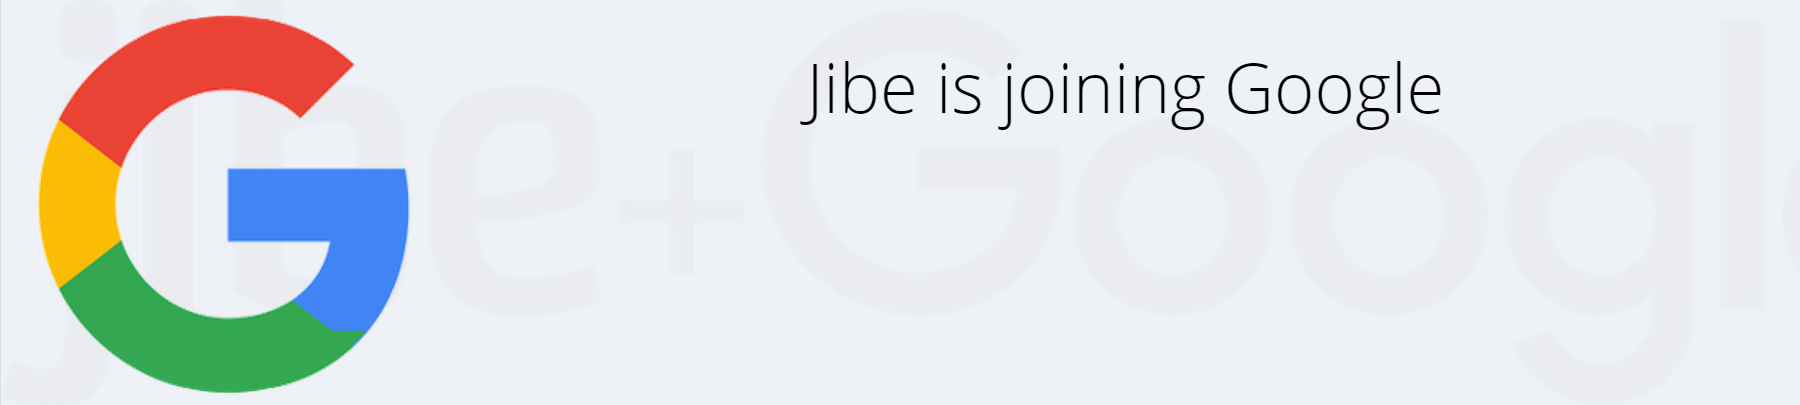 google_jibe